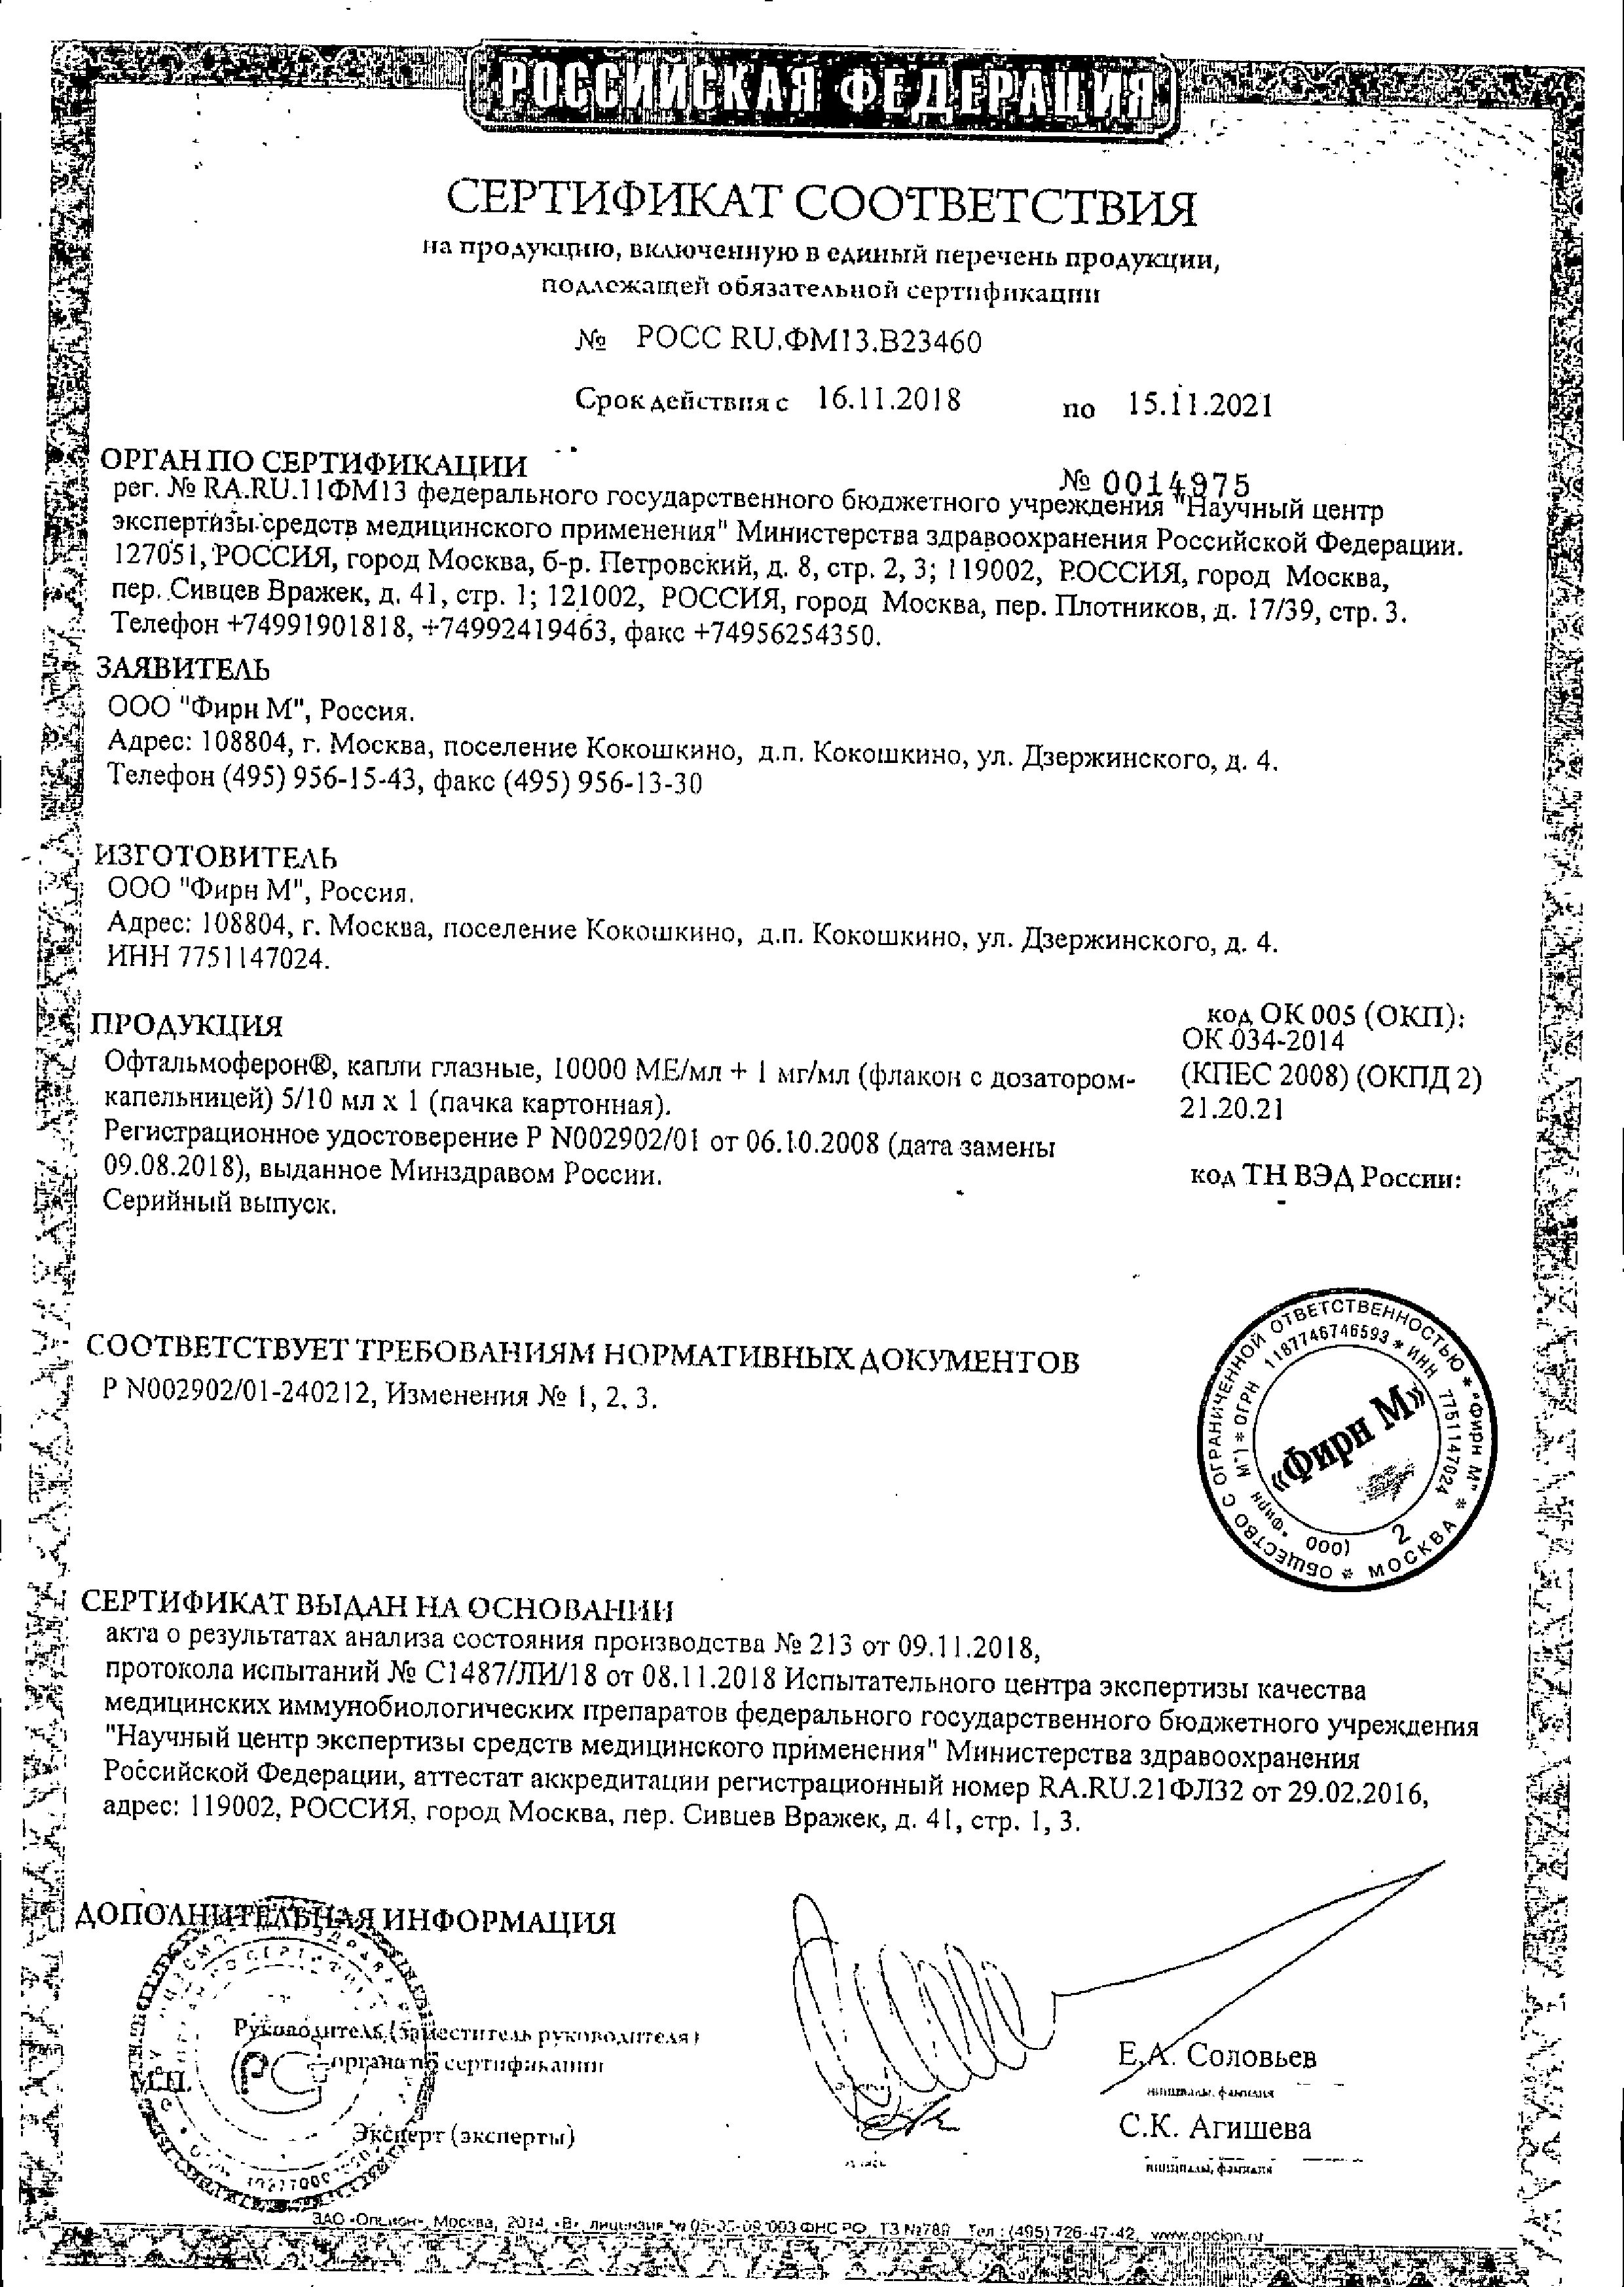 Офтальмоферон сертификат